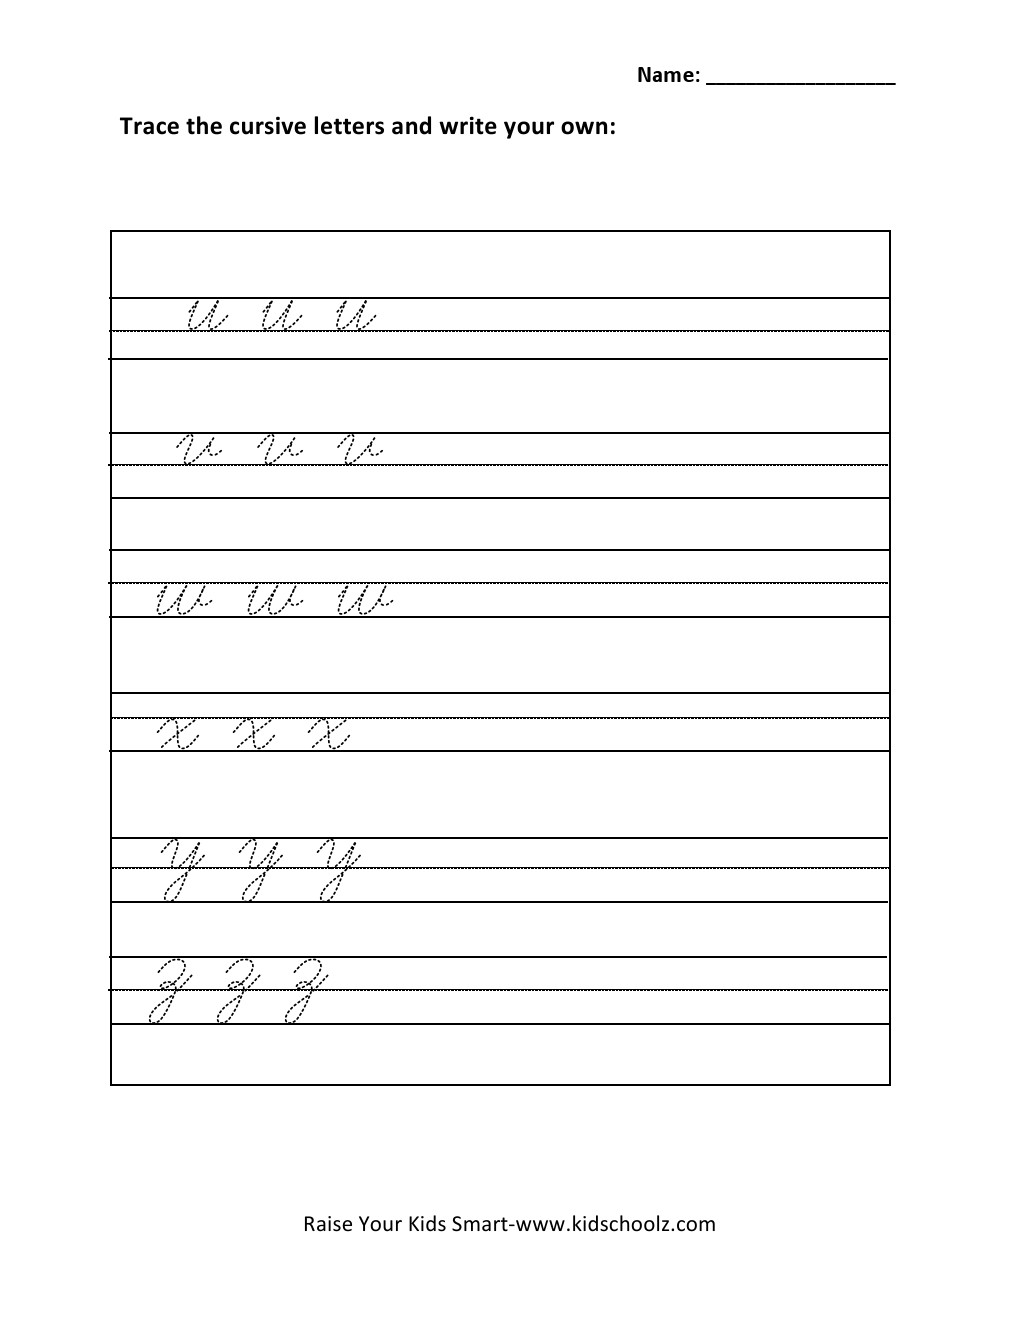 Grade 1 - Cursive Writing Worksheet